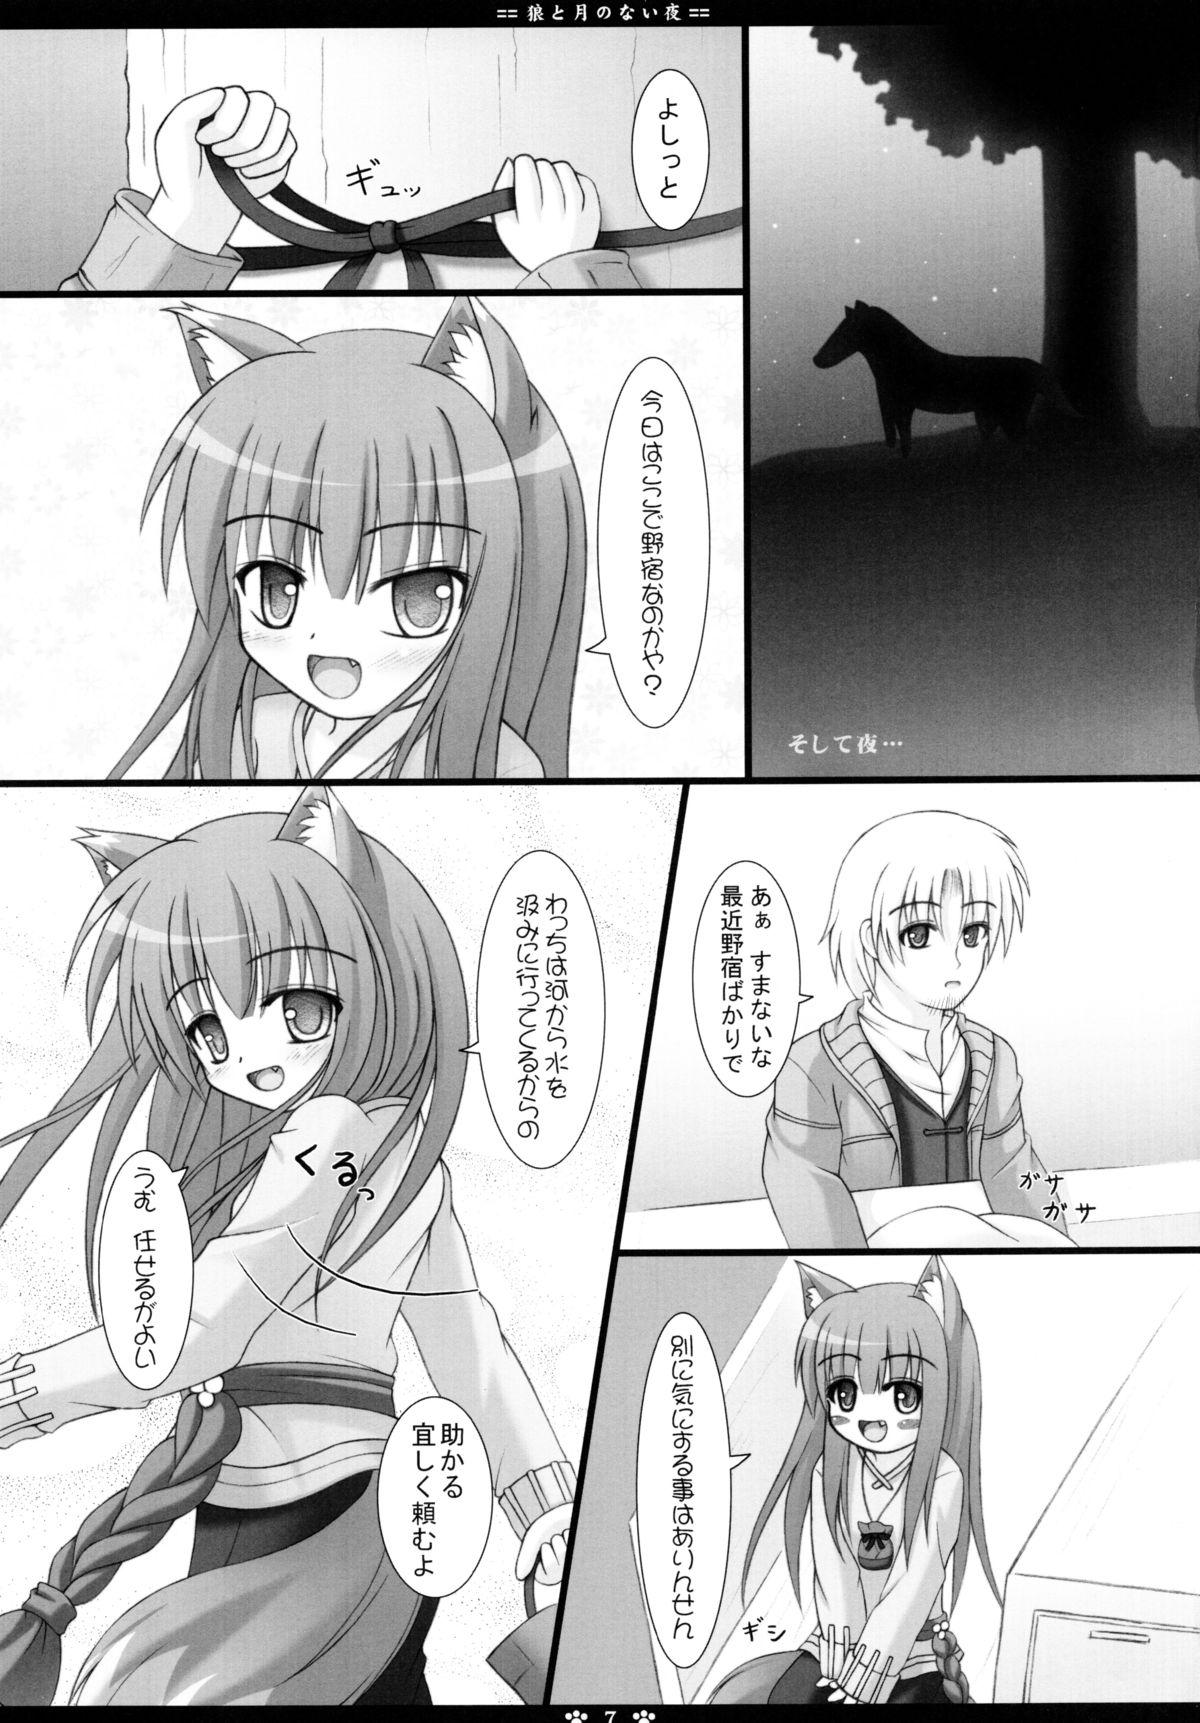 Gaygroup Ookami to Tsuki no Nai Yoru - Spice and wolf 8teen - Page 7